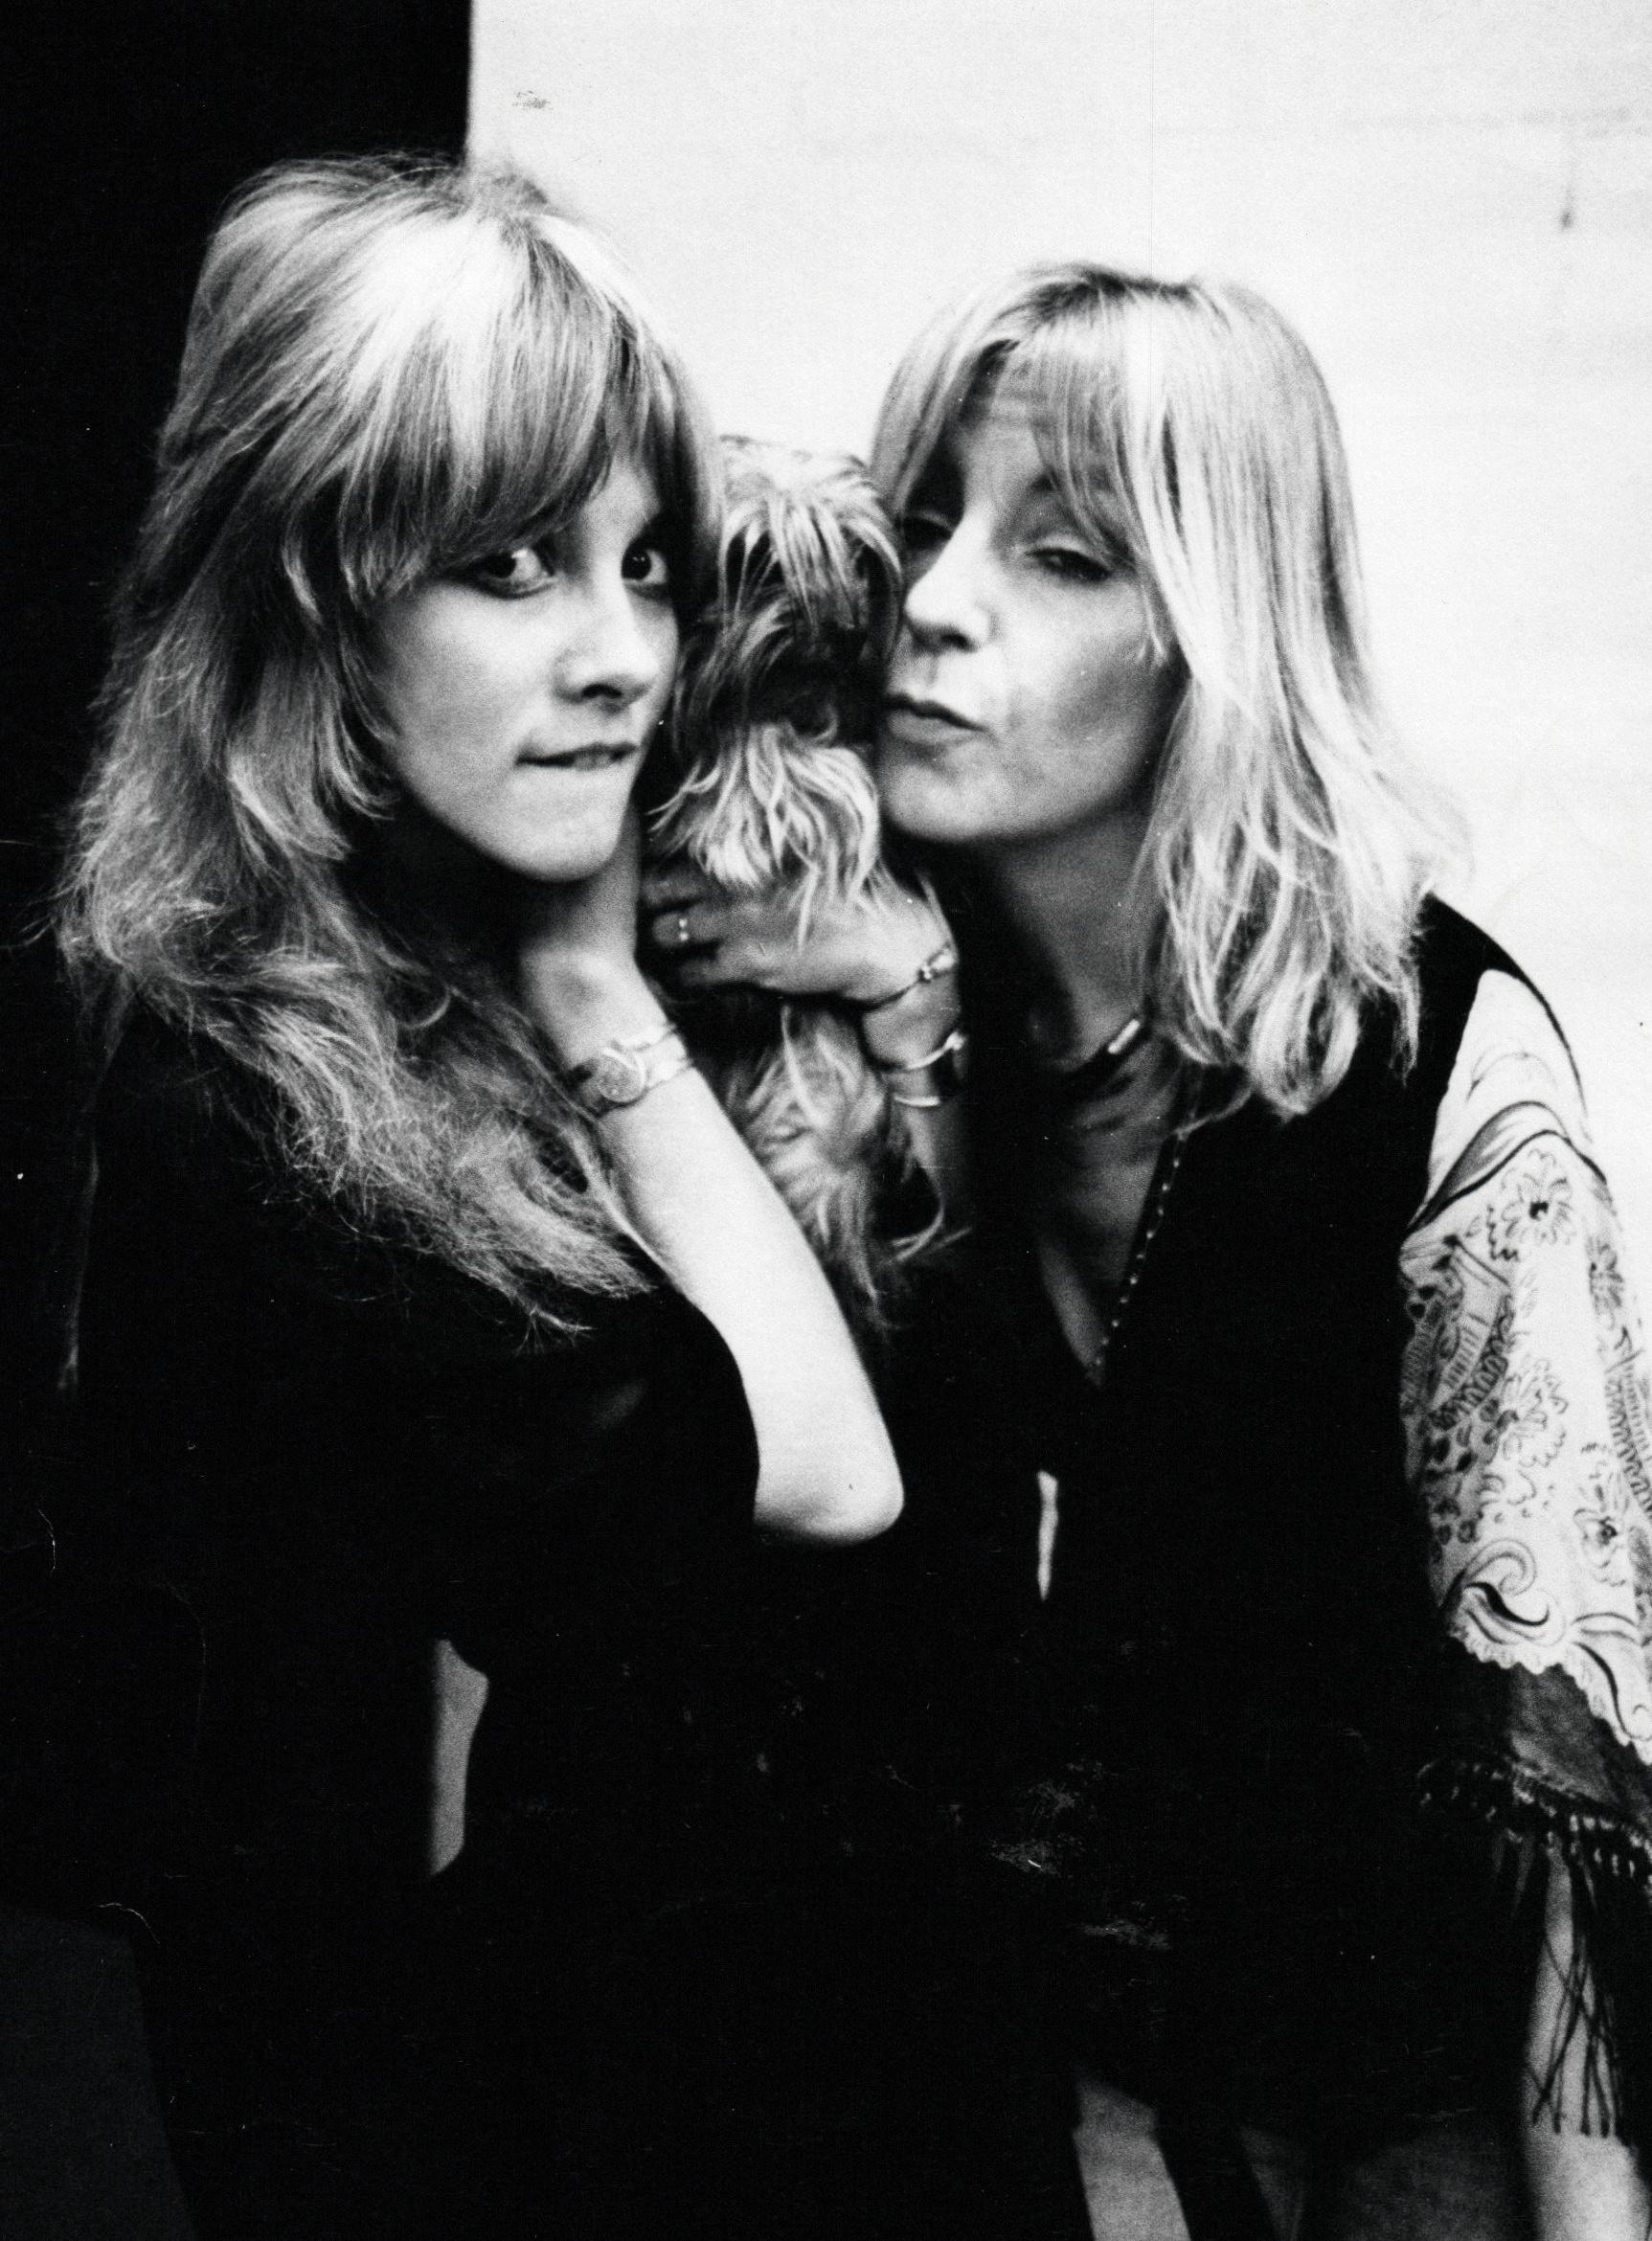 Fin Costello Portrait Photograph - Stevie Nicks and Christine McVie of Fleetwood Mac Vintage Original Photograph